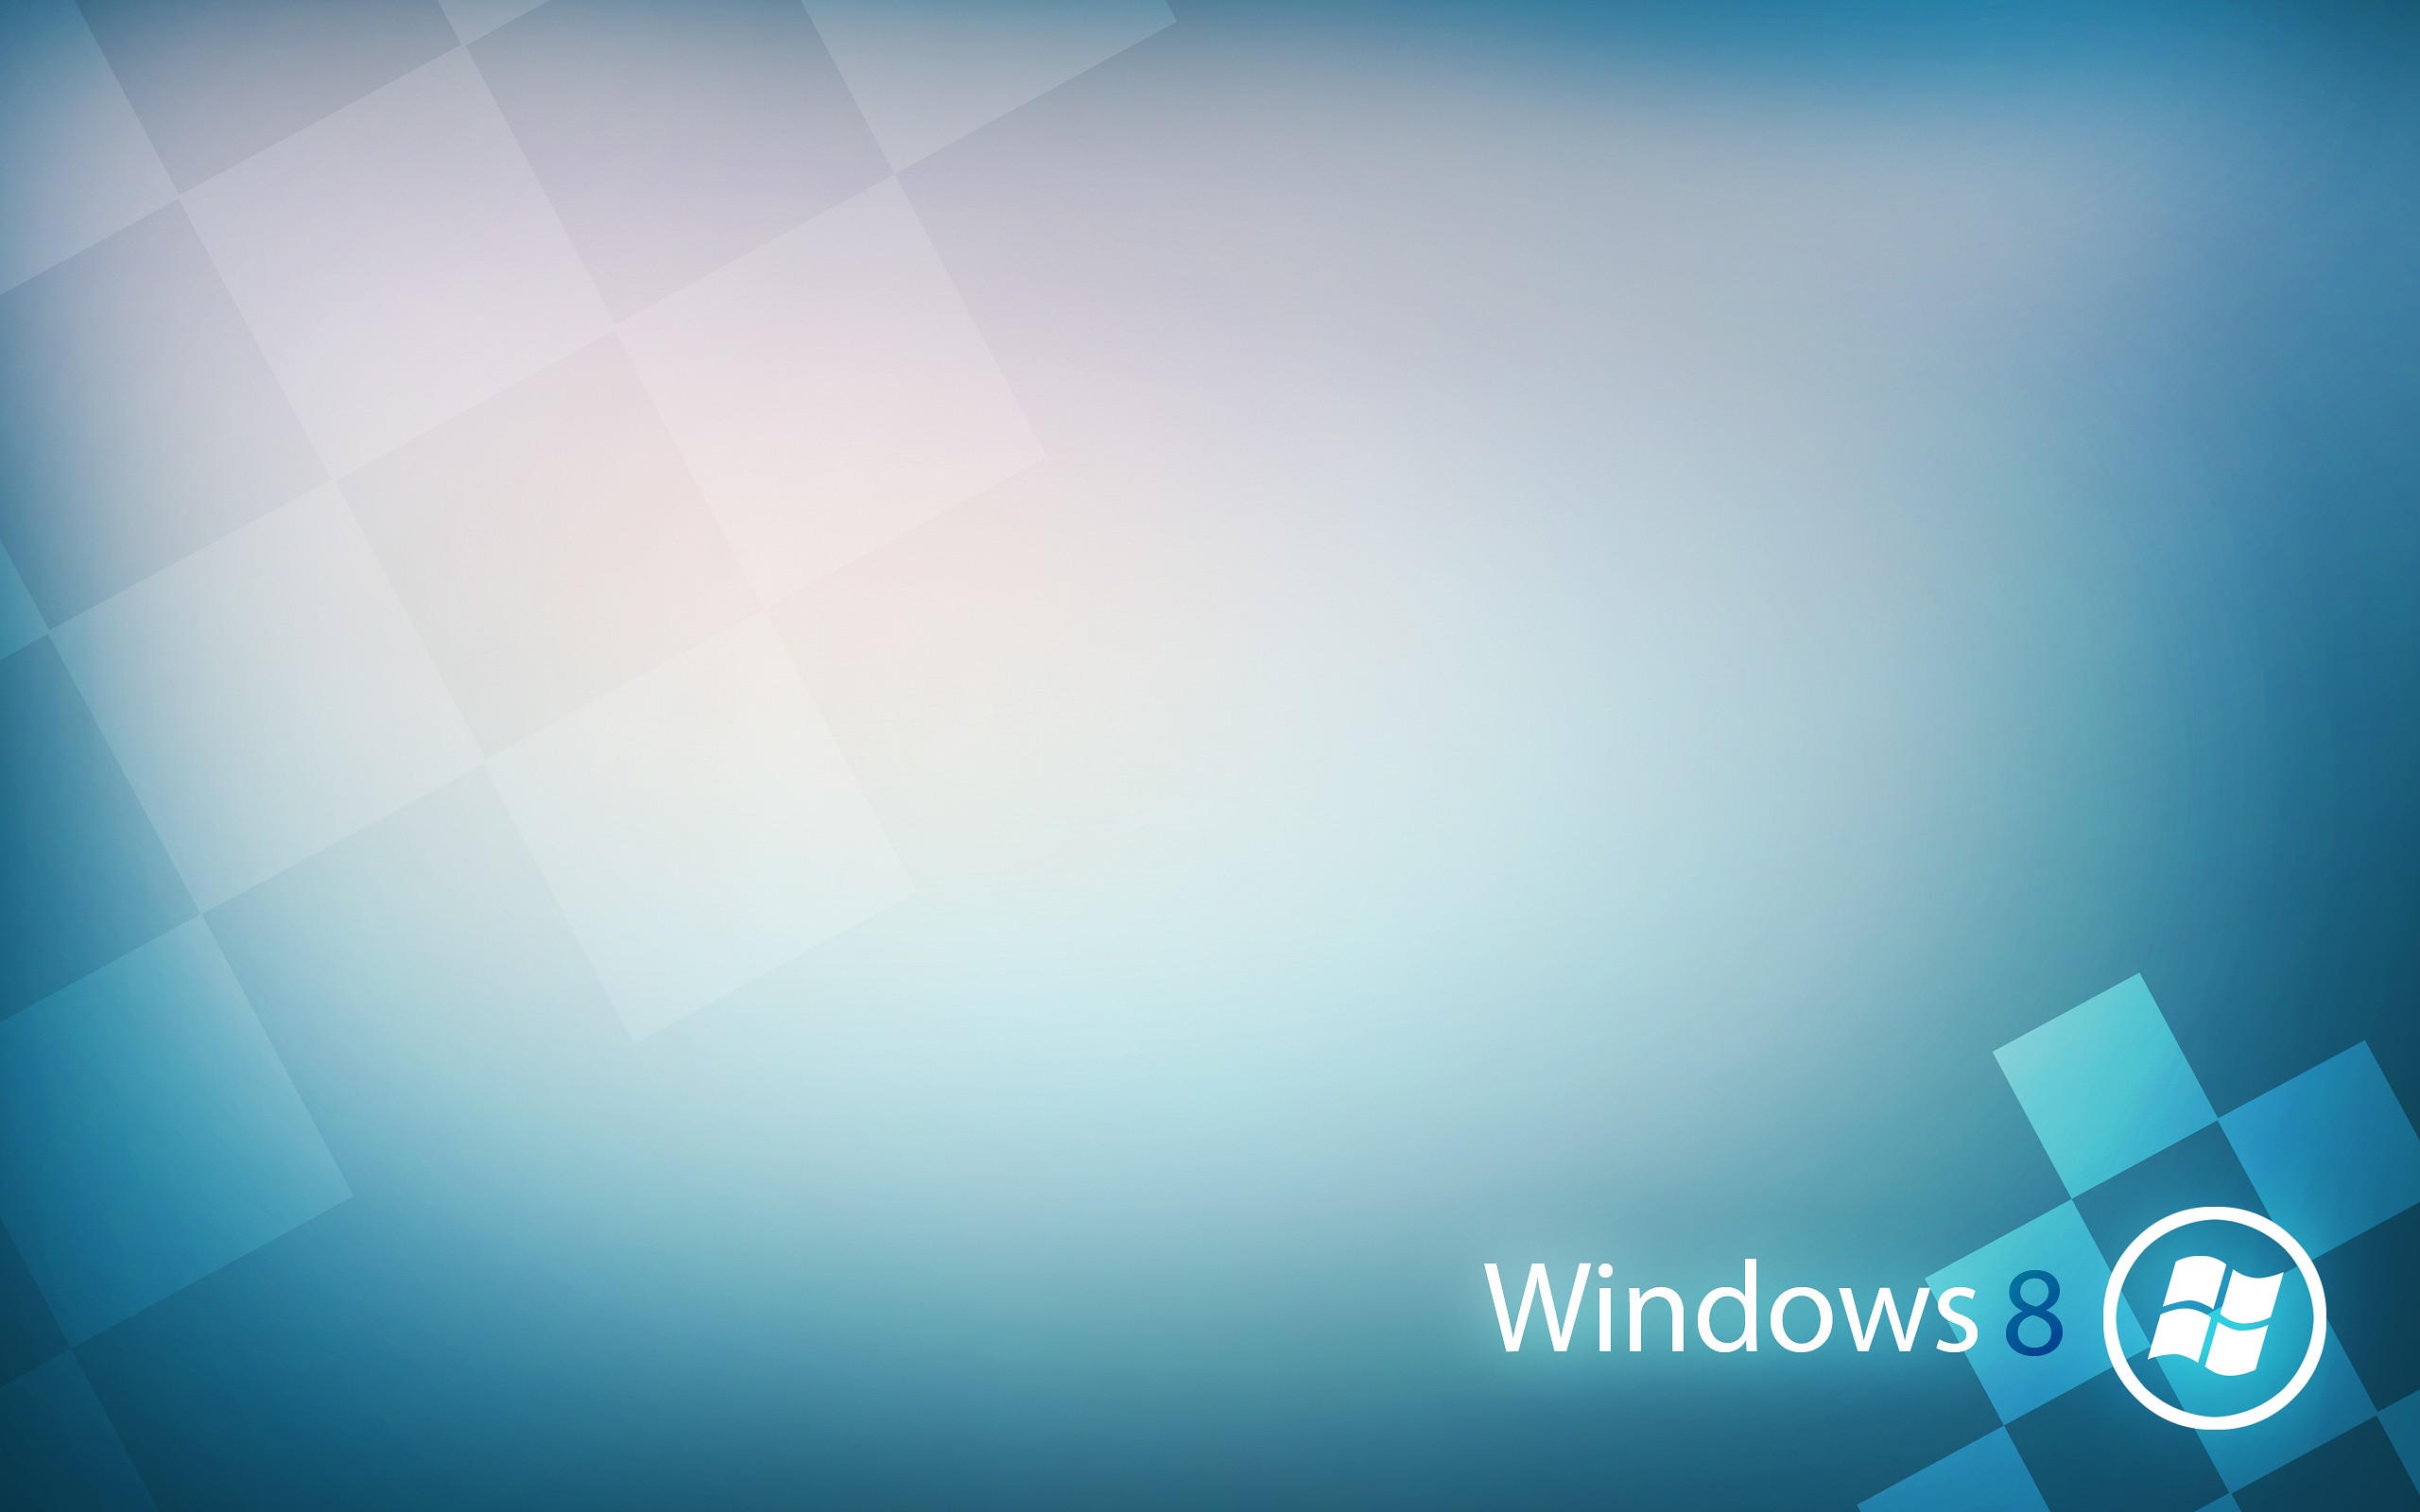 Download the Windows 8 Tiles Wallpaper, Windows 8 Tiles iPhone ...